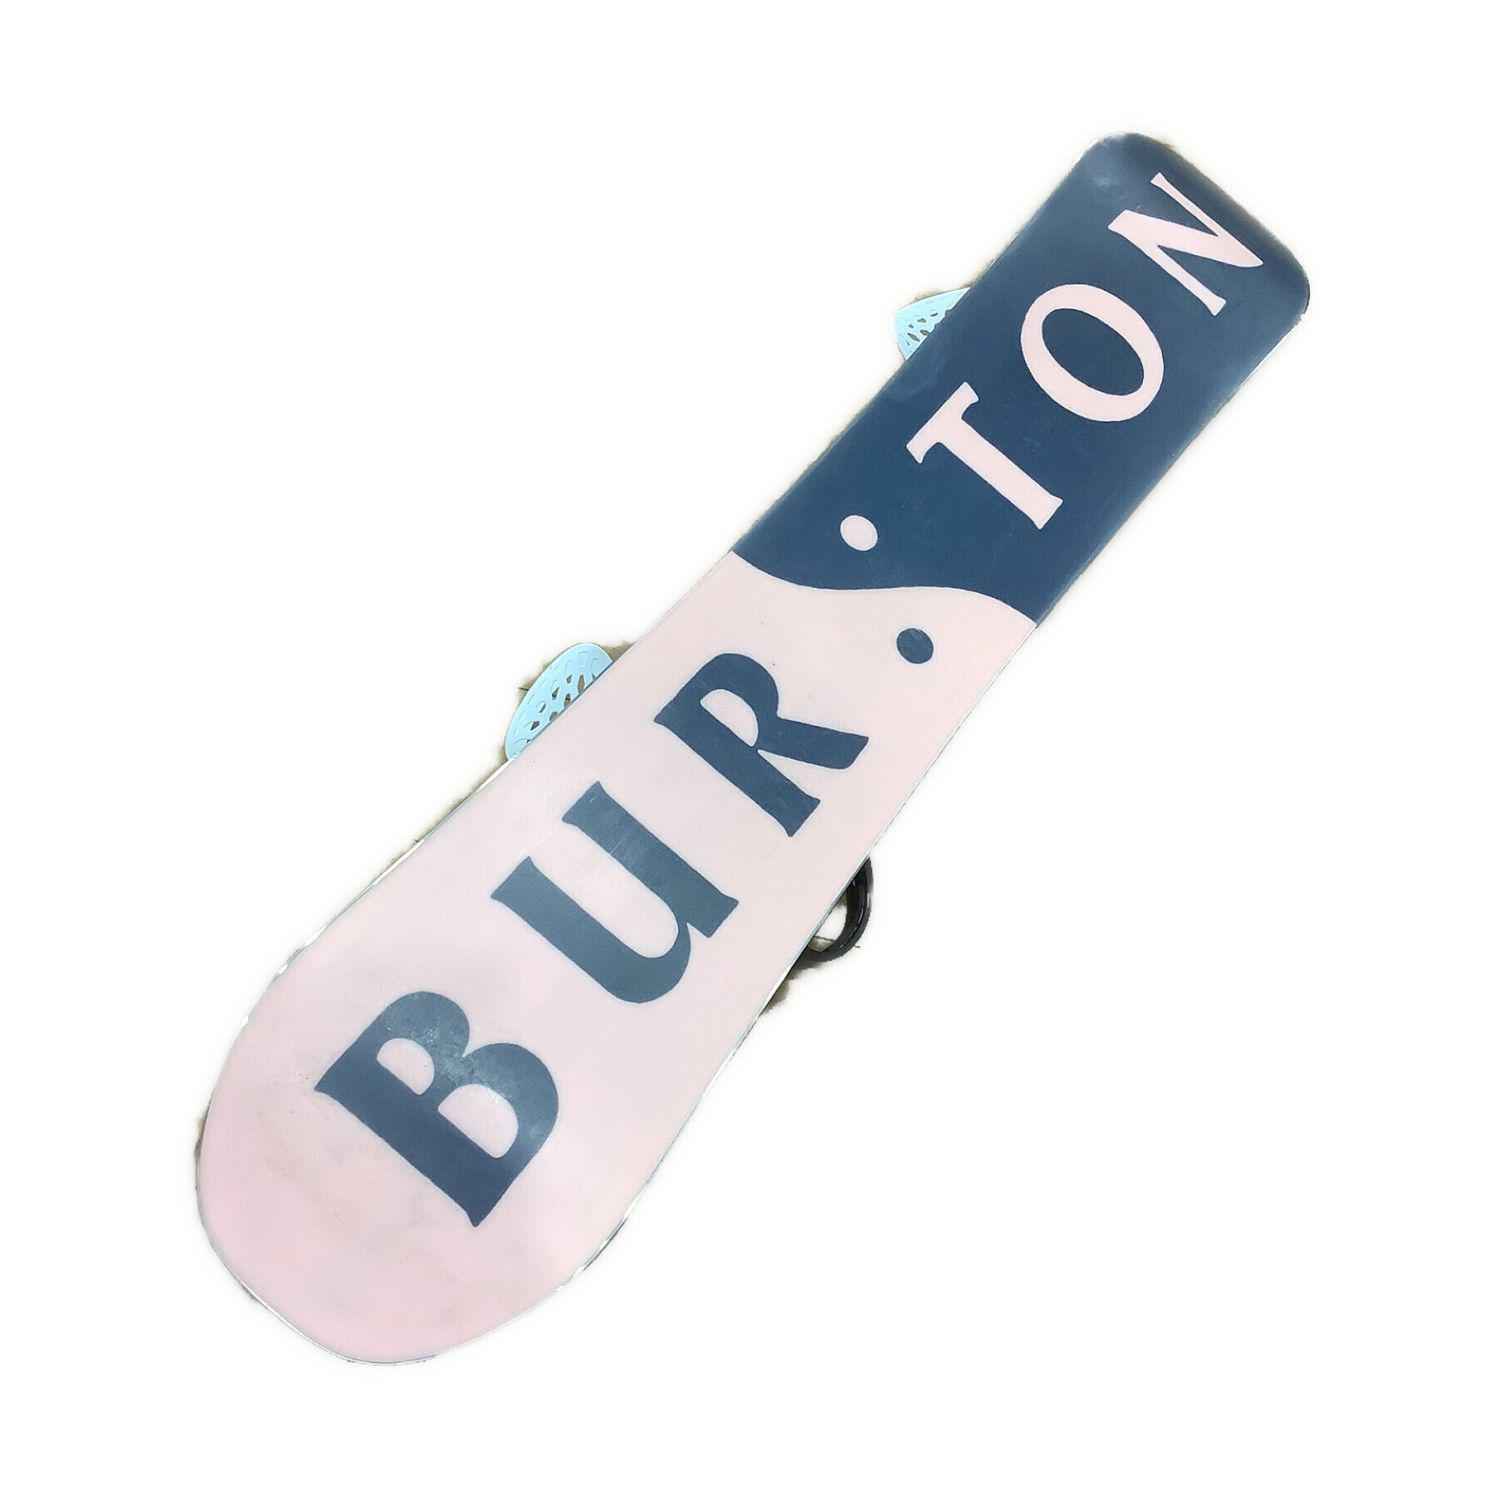 BURTON (バートン) スノーボード 149cm 19/20 キャンバー REWIND